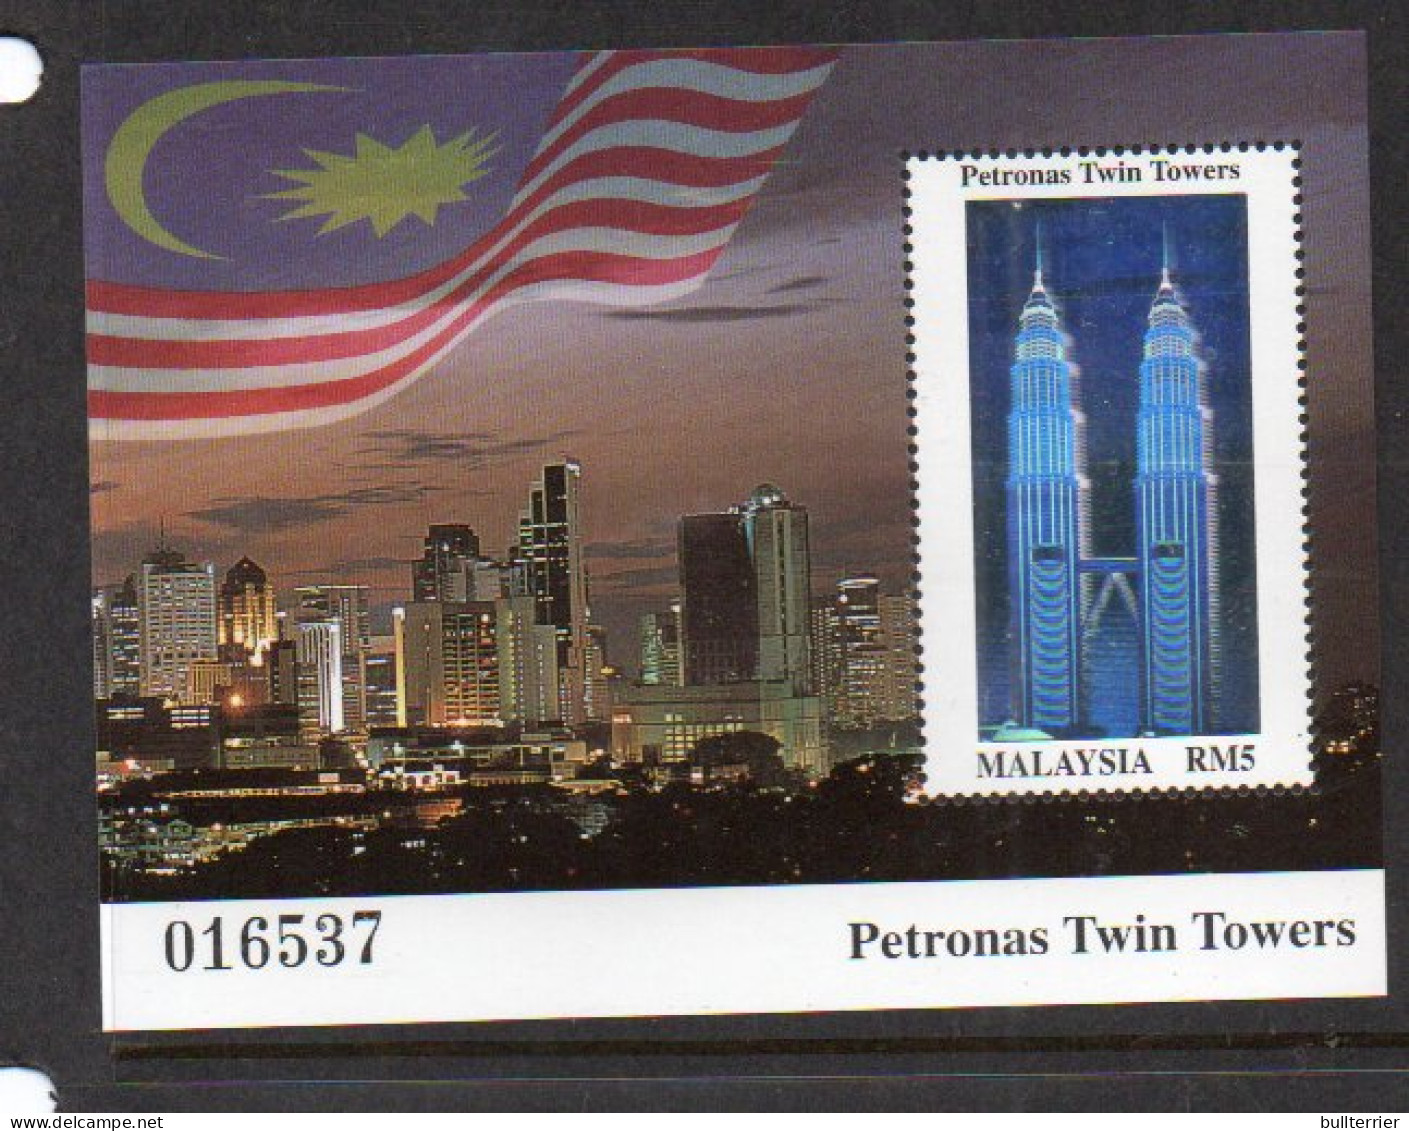 HOLOGRAMS - MALAYSIA - 1999 - PETRONAS TOWER  HOLOGRAM  SOUVENIR SHEET  MINT NEVER HINGED  - Hologrammes